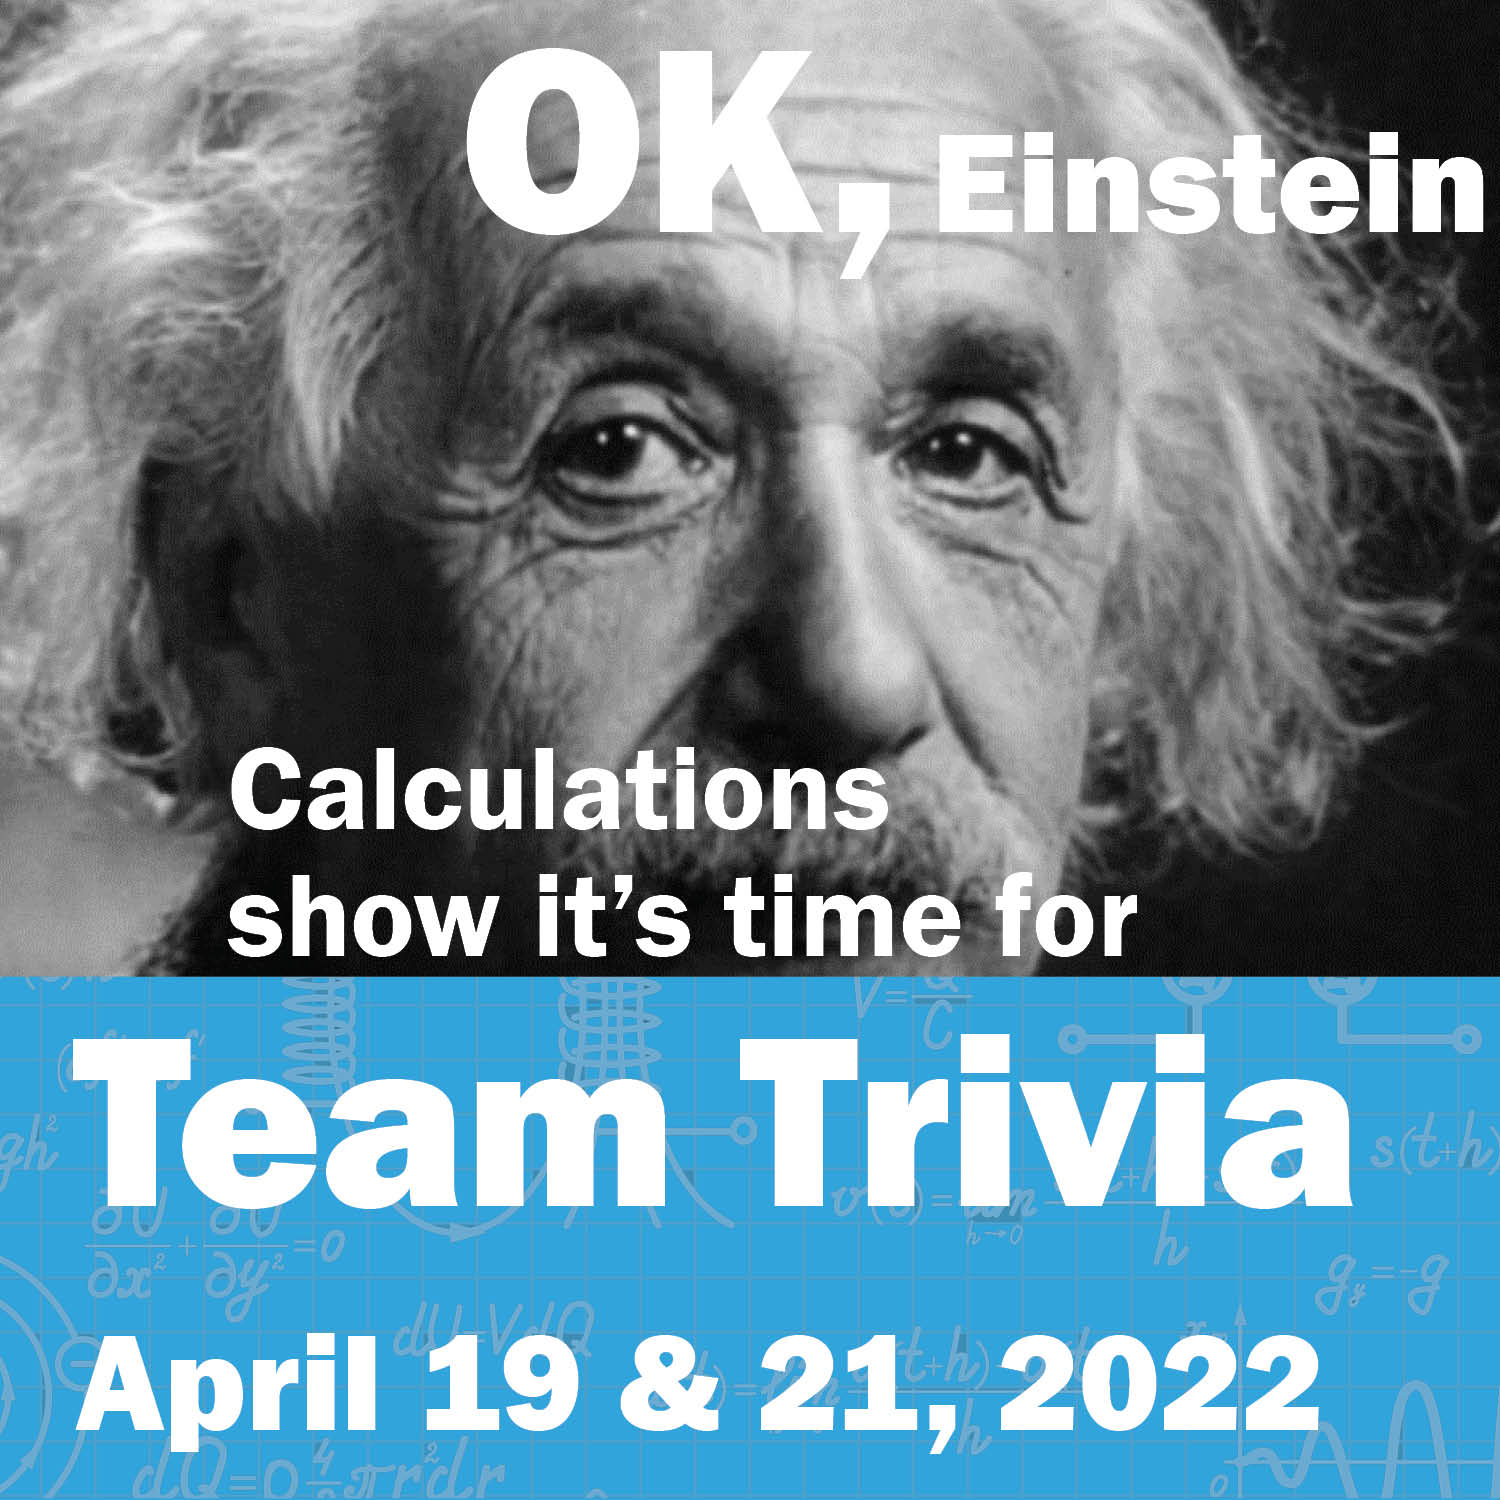 Calling all brainiacs as Team Trivia returns in person April 19 & 21 